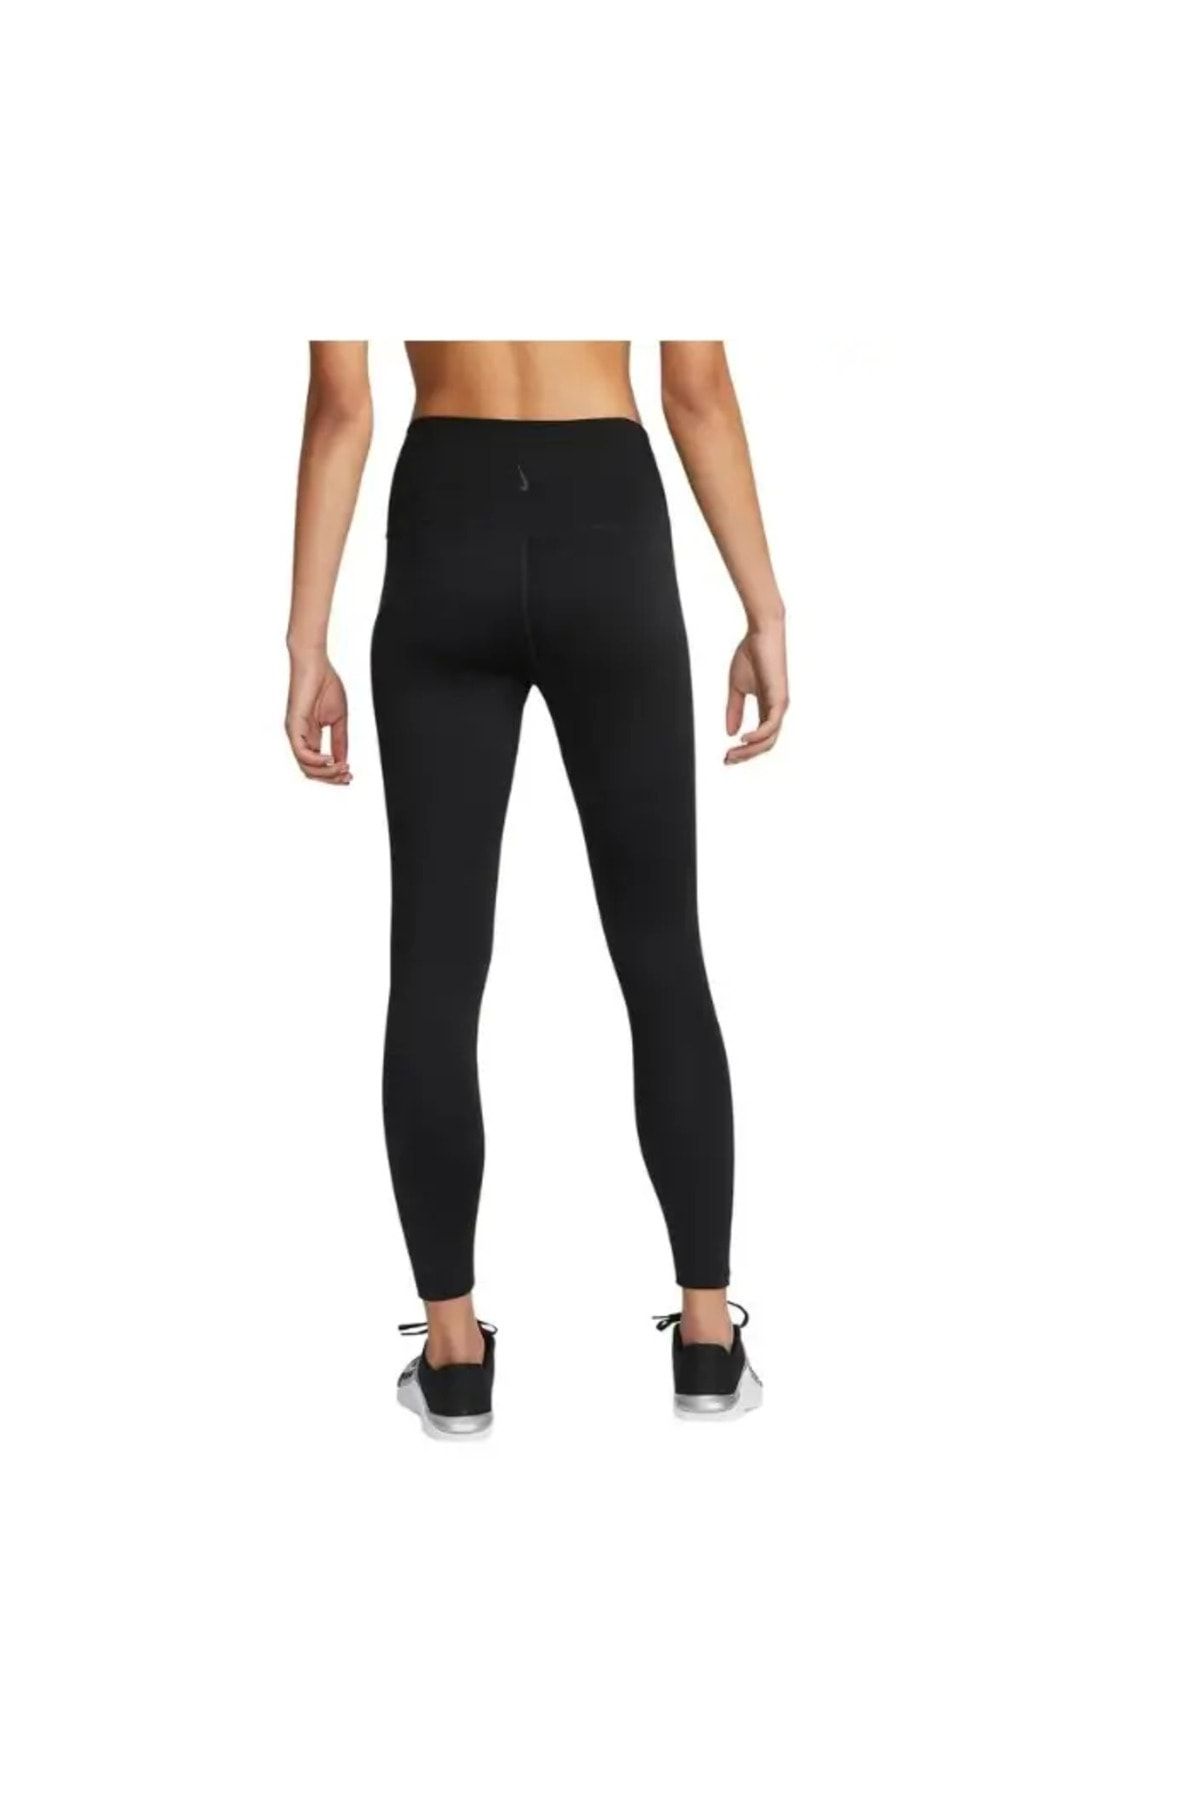 Nike Yoga Dri-Fit High Waisted 7/8 Metallic Trim Leggings DD5772-010 Women  Small